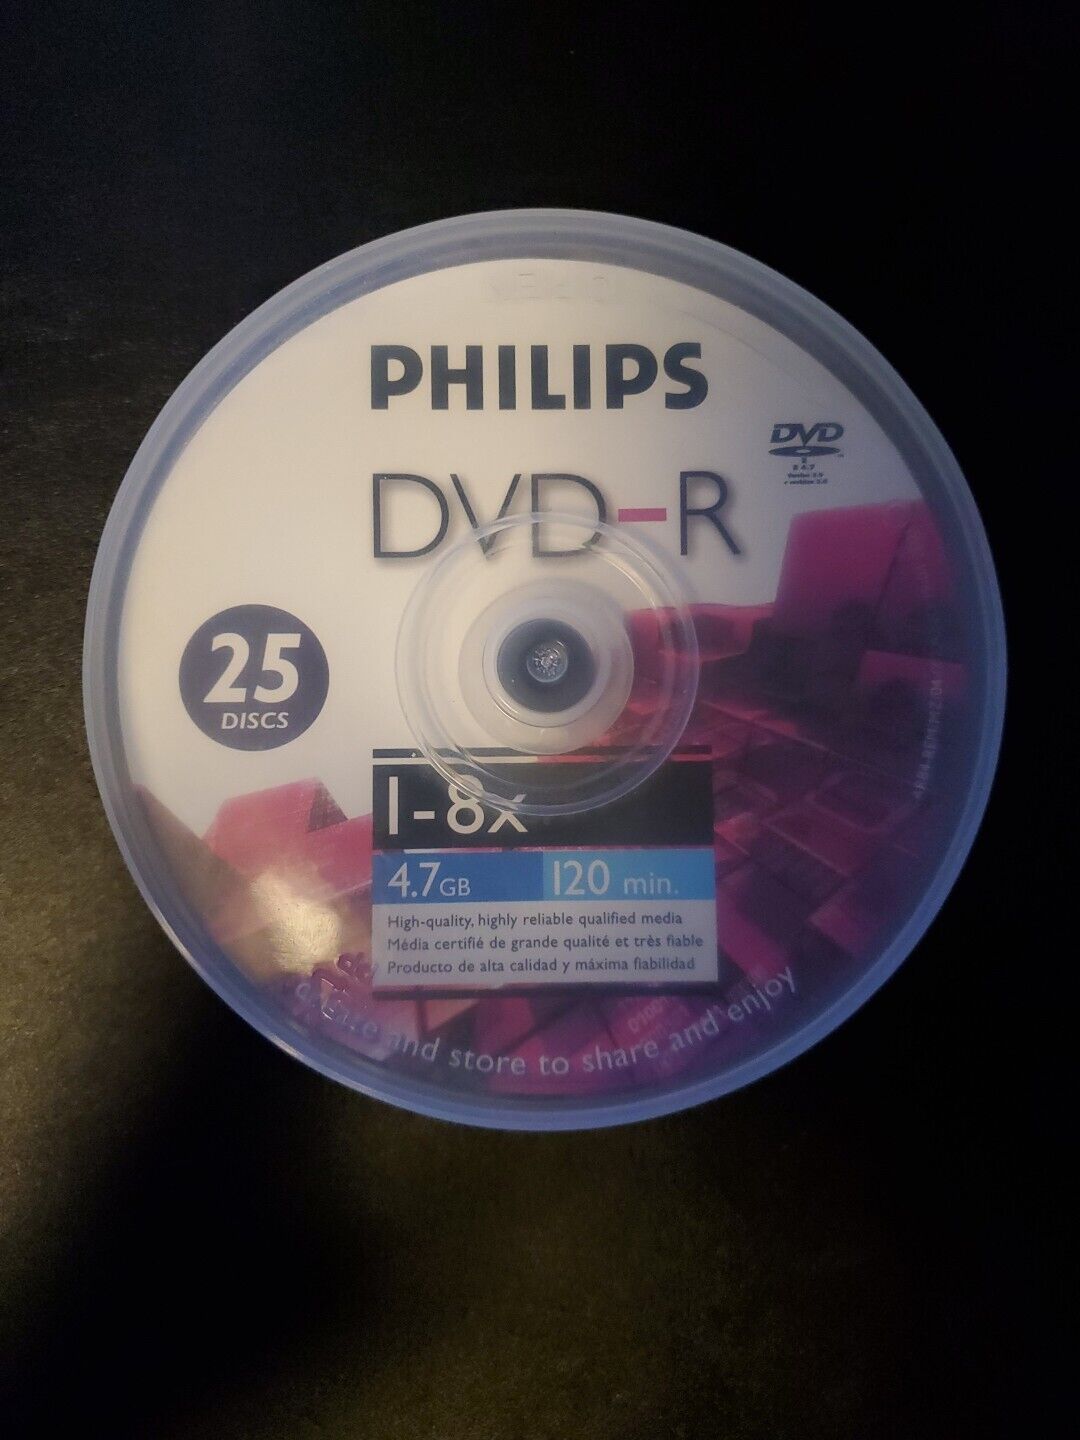 Philips DVD-R 1-8x 4.7 GB 120 Min 25 Discs New & Sealed